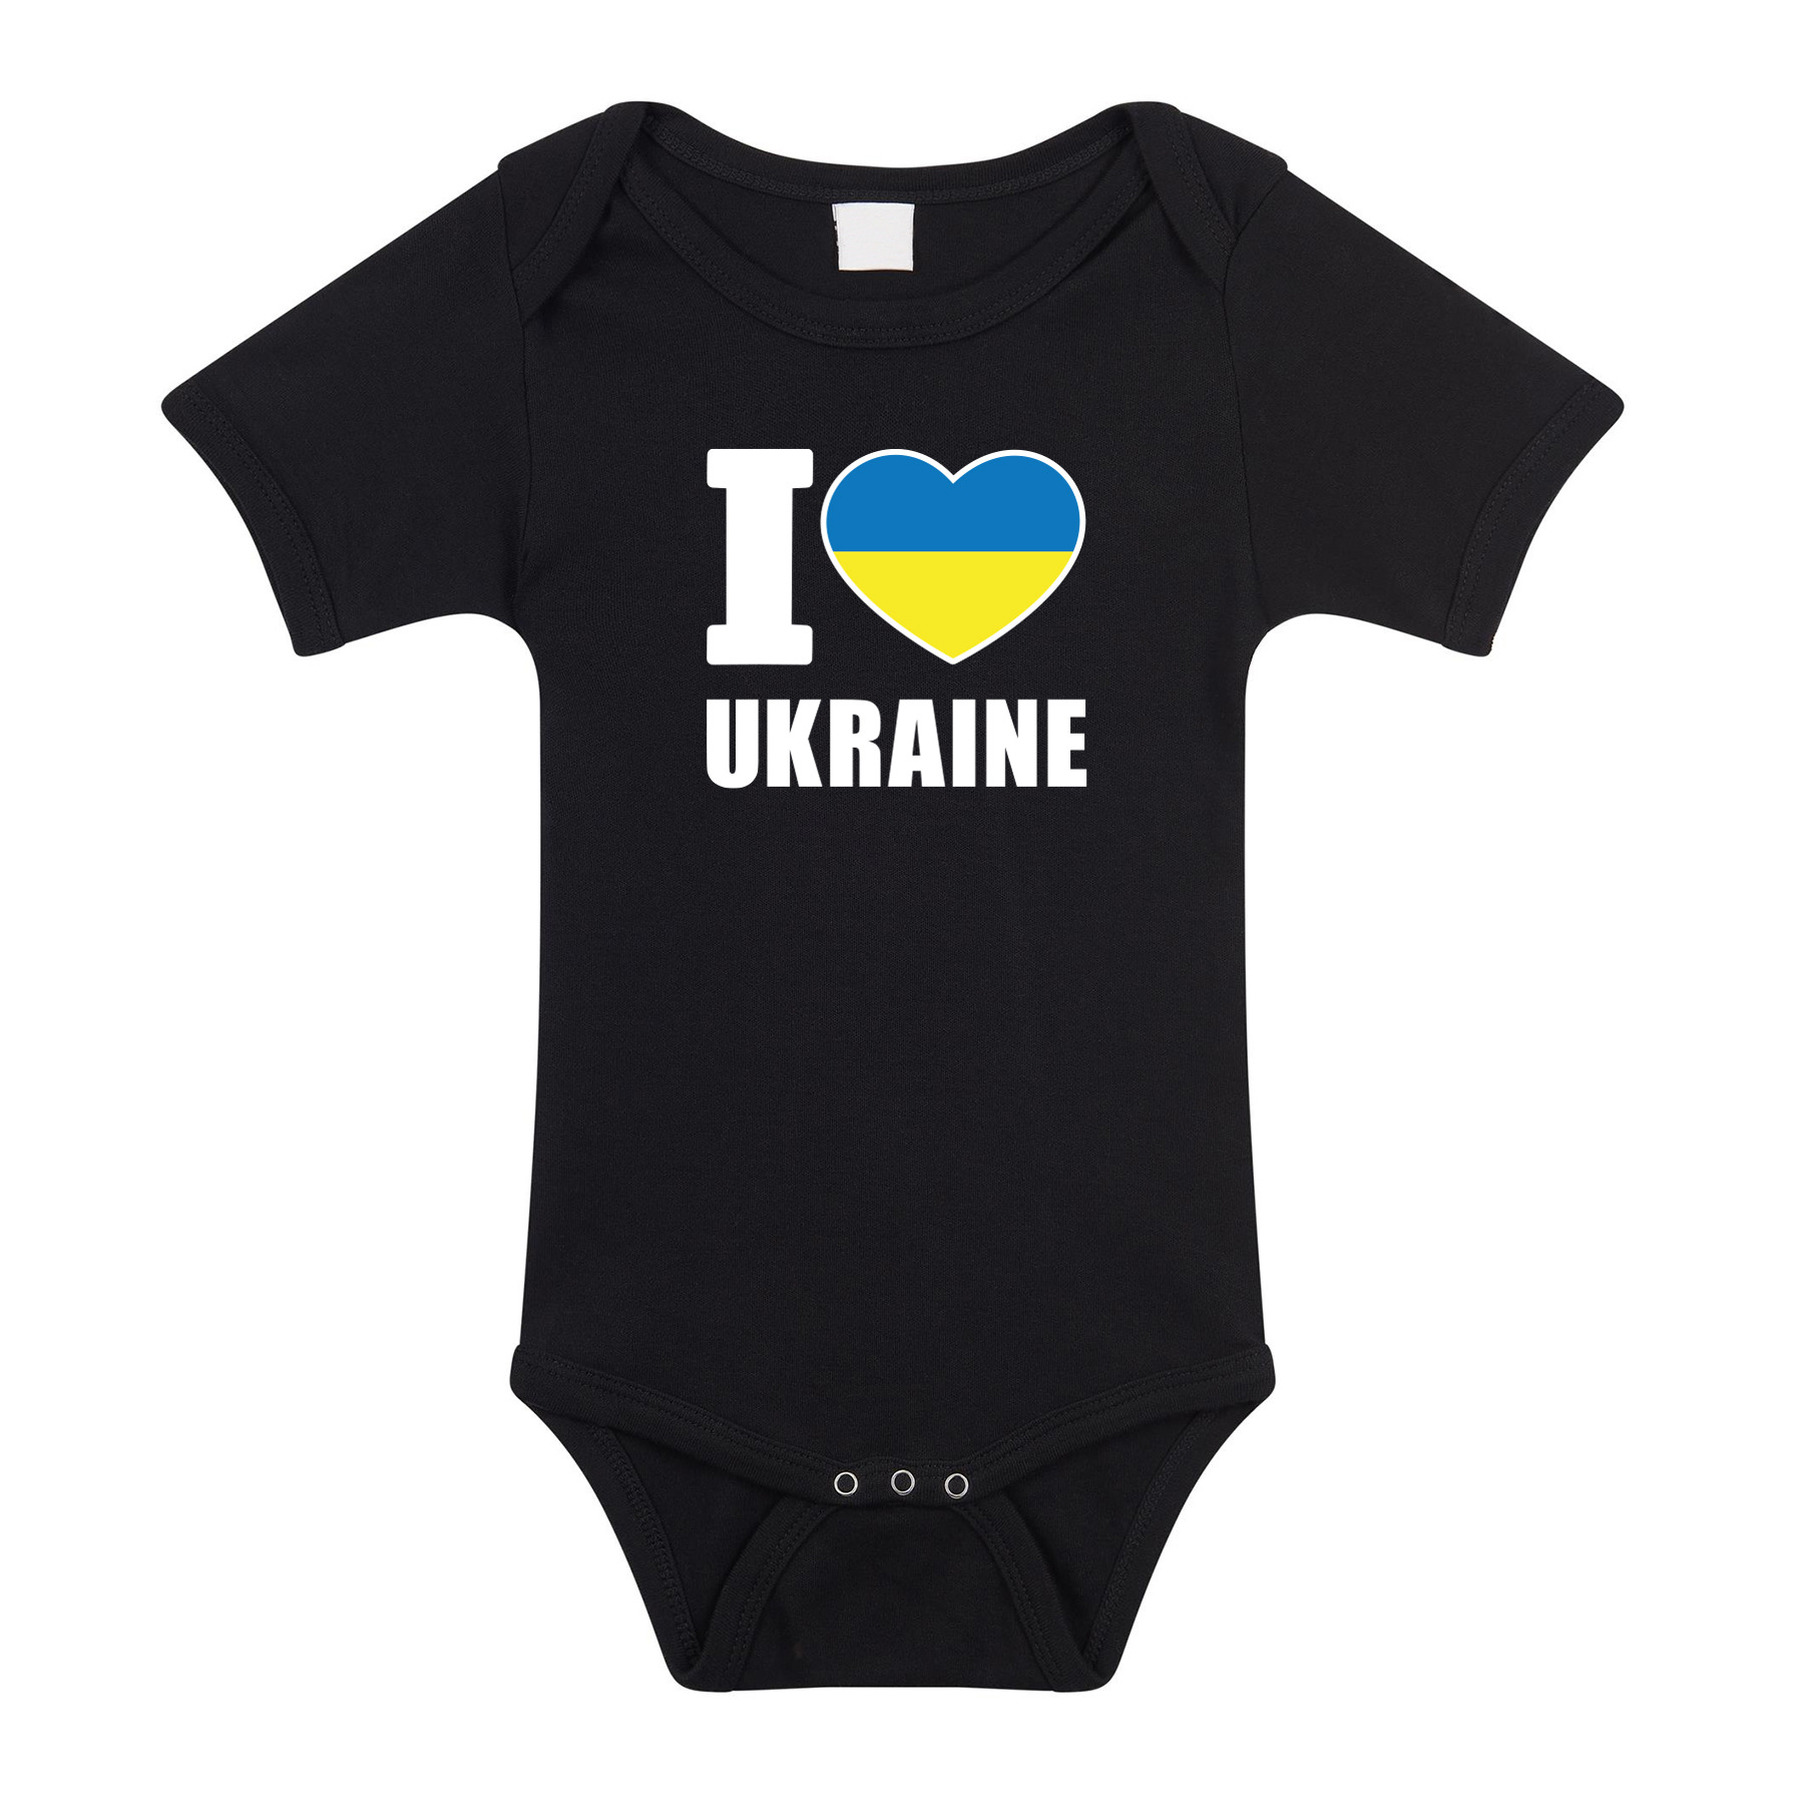 I love Ukraine baby rompertje zwart Oekraine jongen-meisje